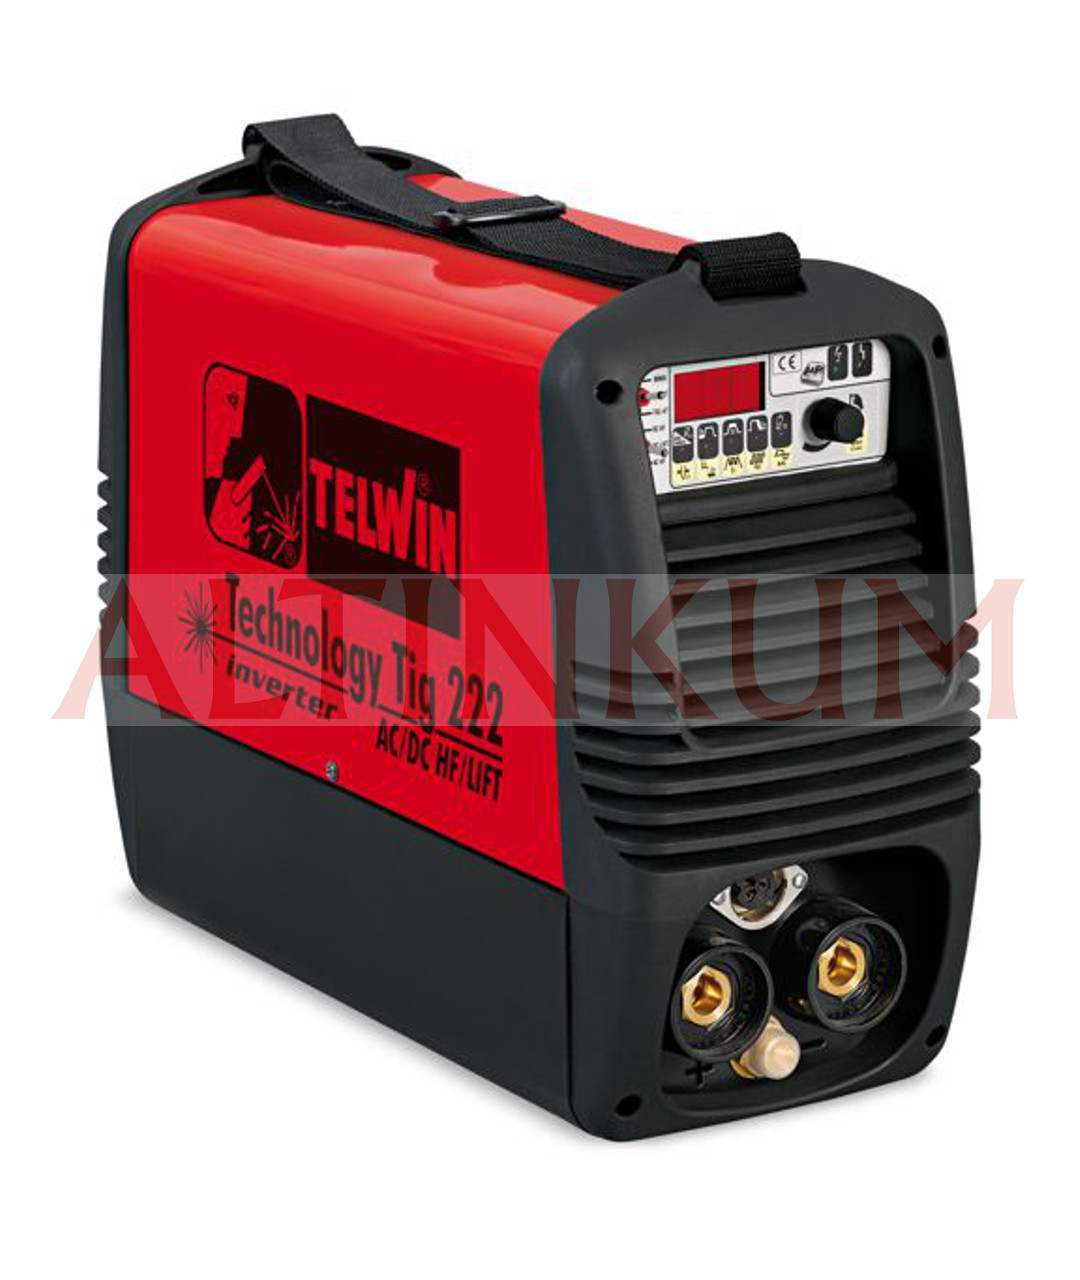 Telwin Technology Tig 222 AC/DC HF/LIFT 200 Amper İnverter Kaynak Makinası